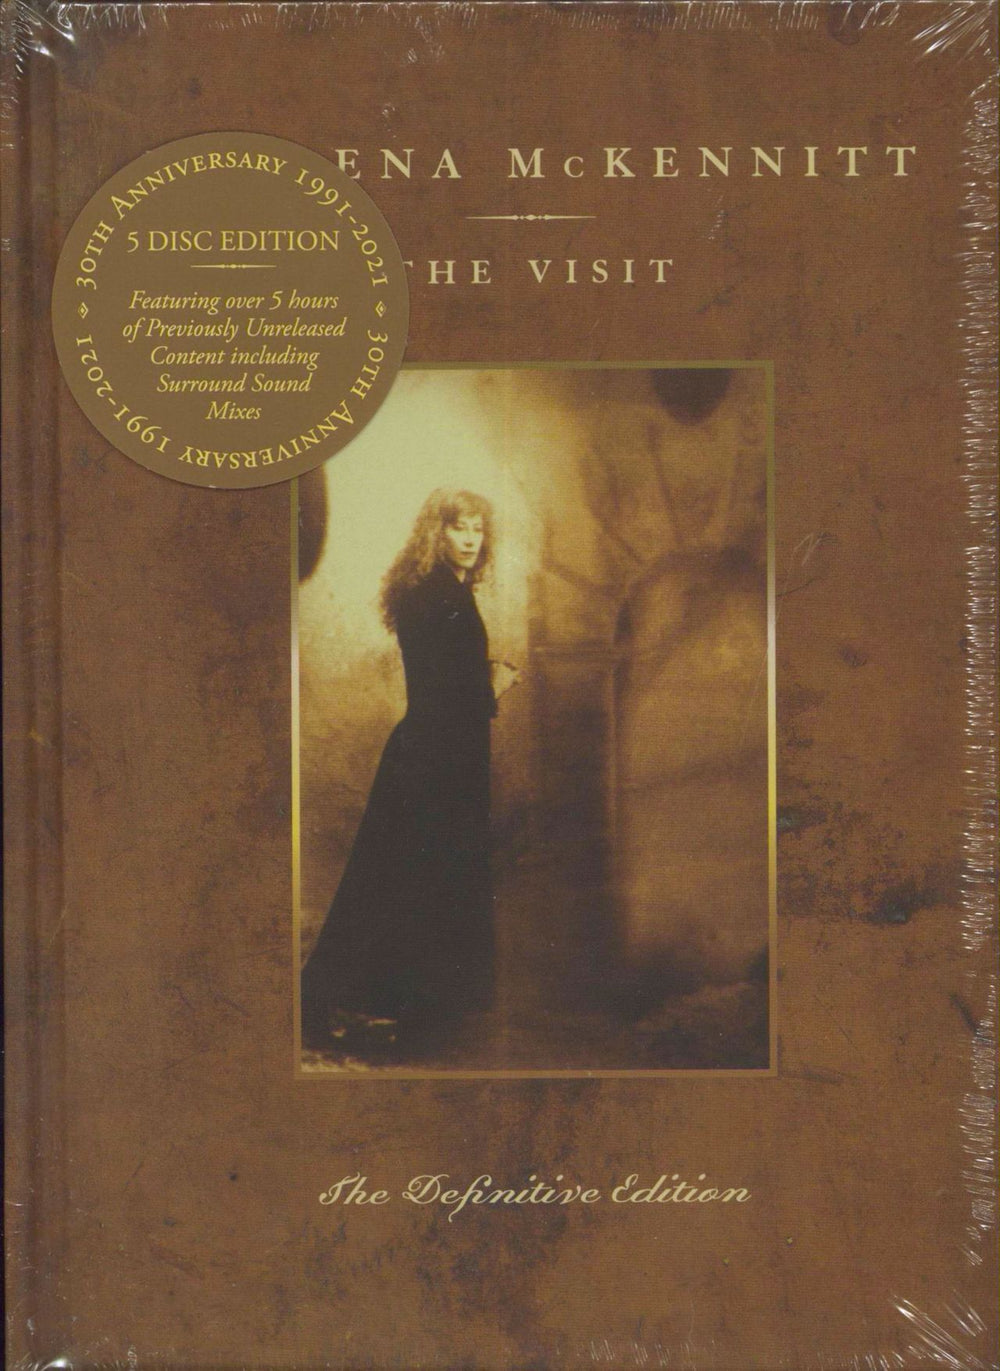 Loreena McKennitt The Visit: The Definitive Edition [4CD/1DVD] - Sealed UK 4-CD album set QRCD104DE